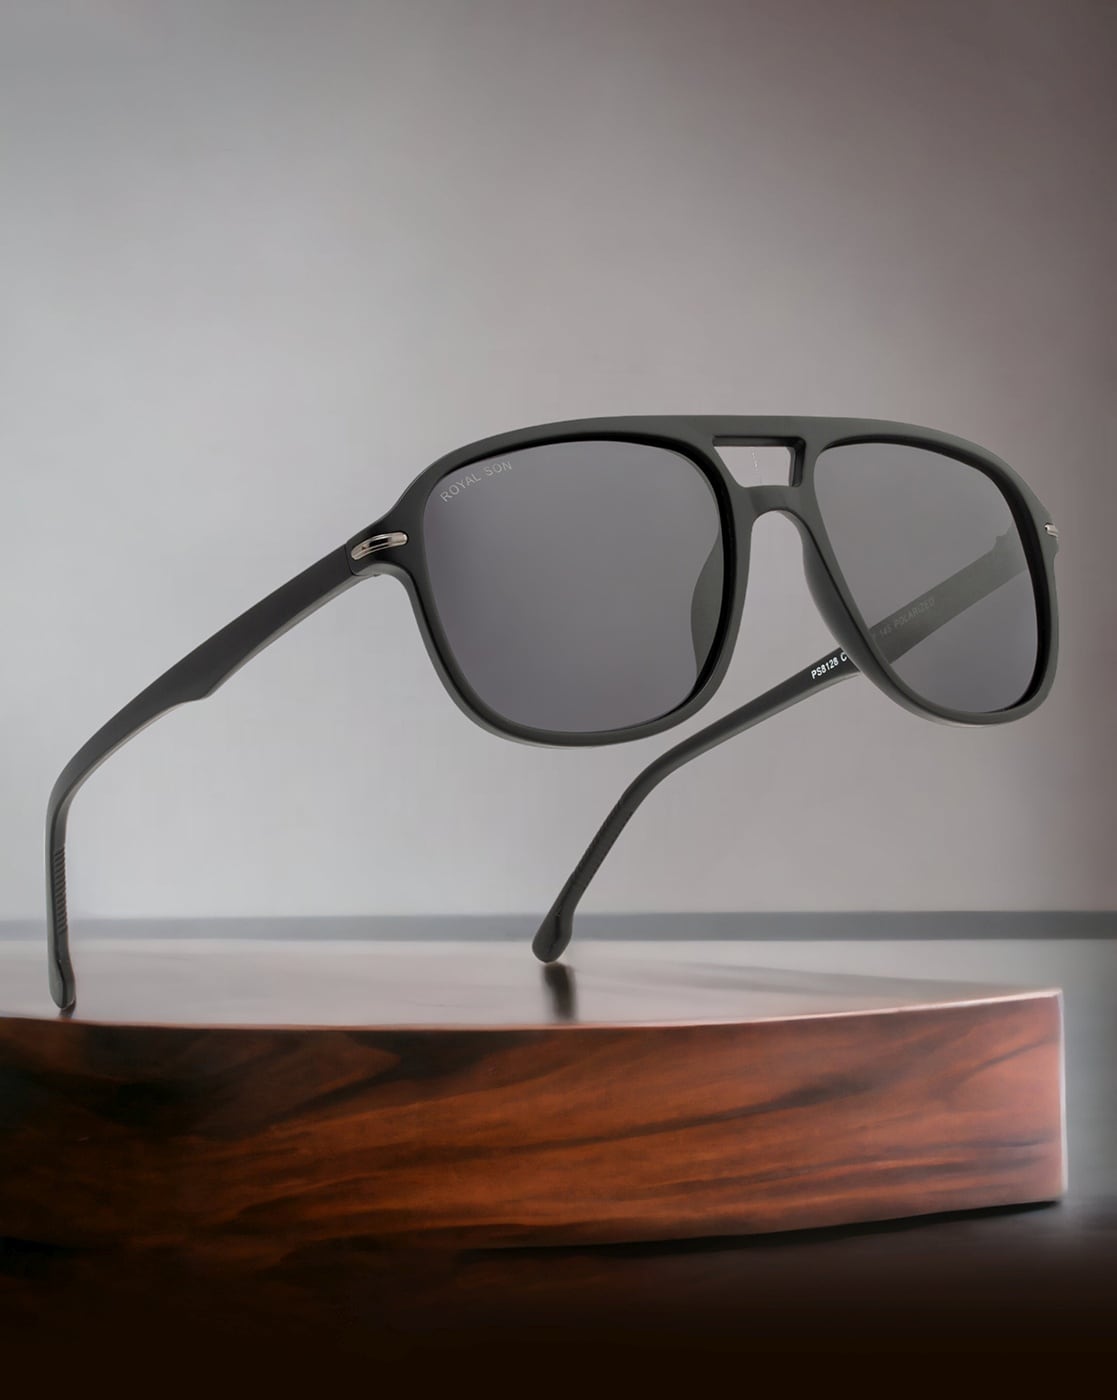 Buy Black Sunglasses for Men by ROYAL SON Online